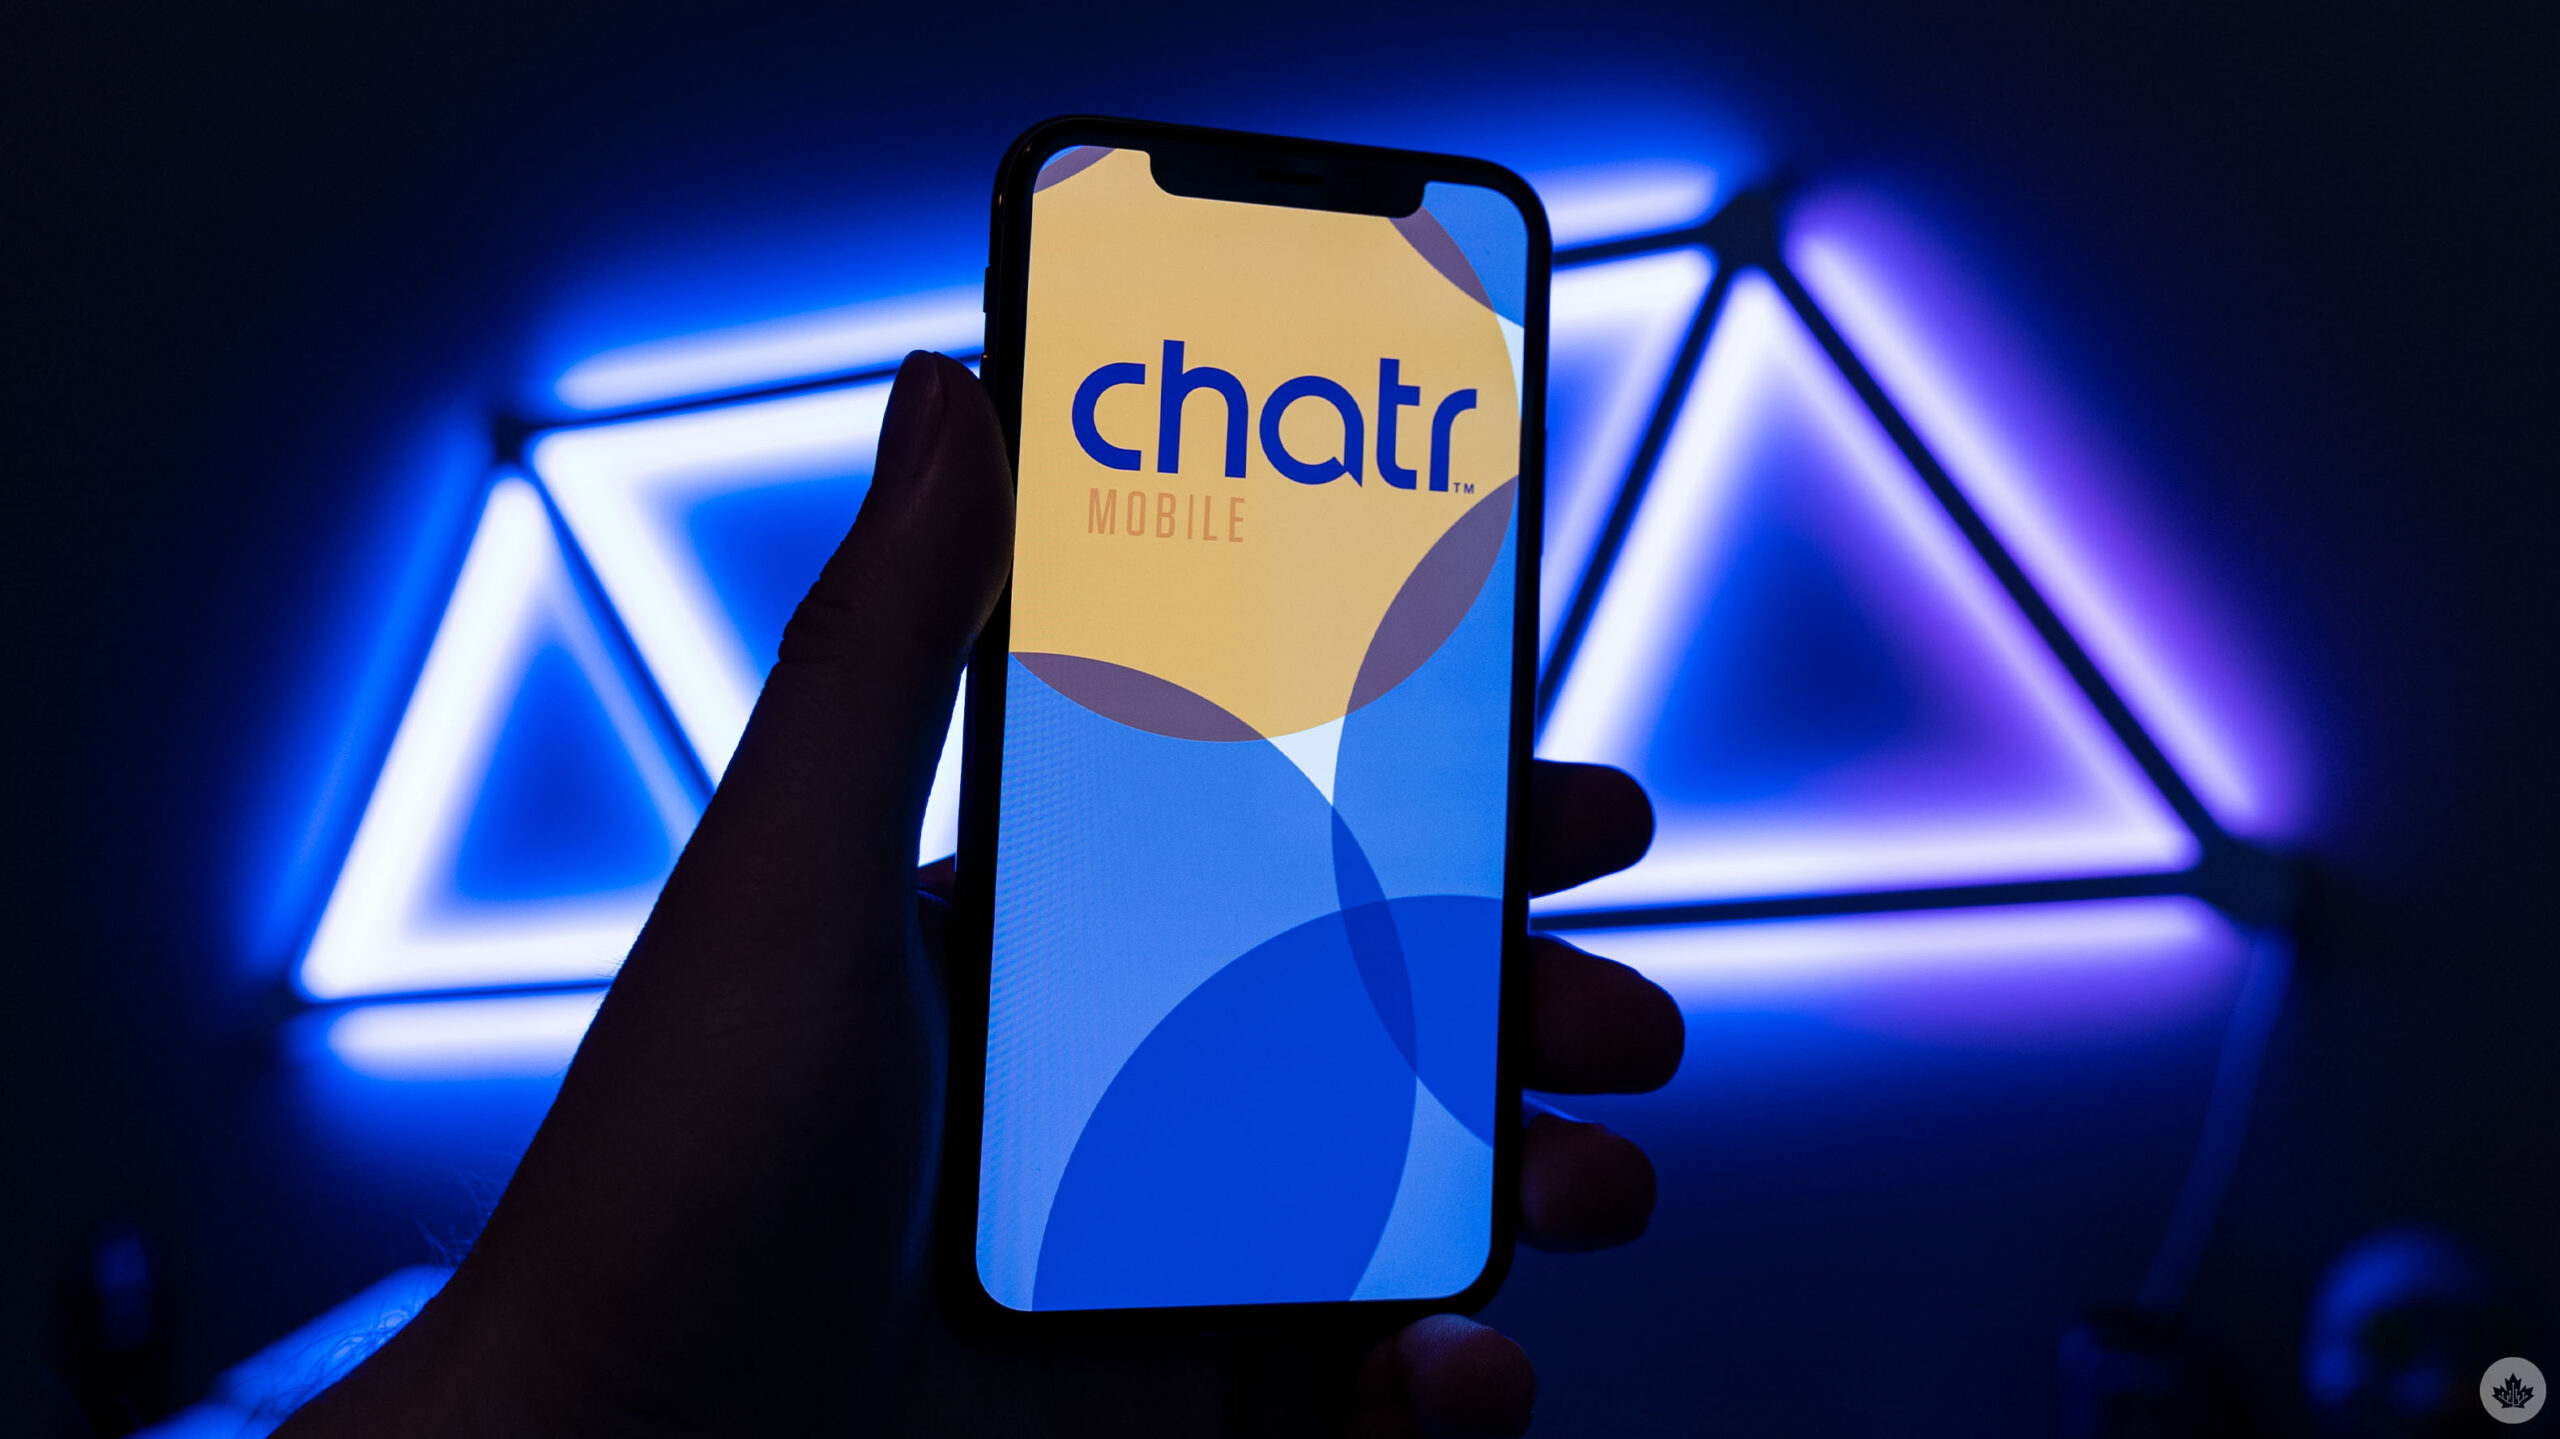 Chatr logo on an iPhone